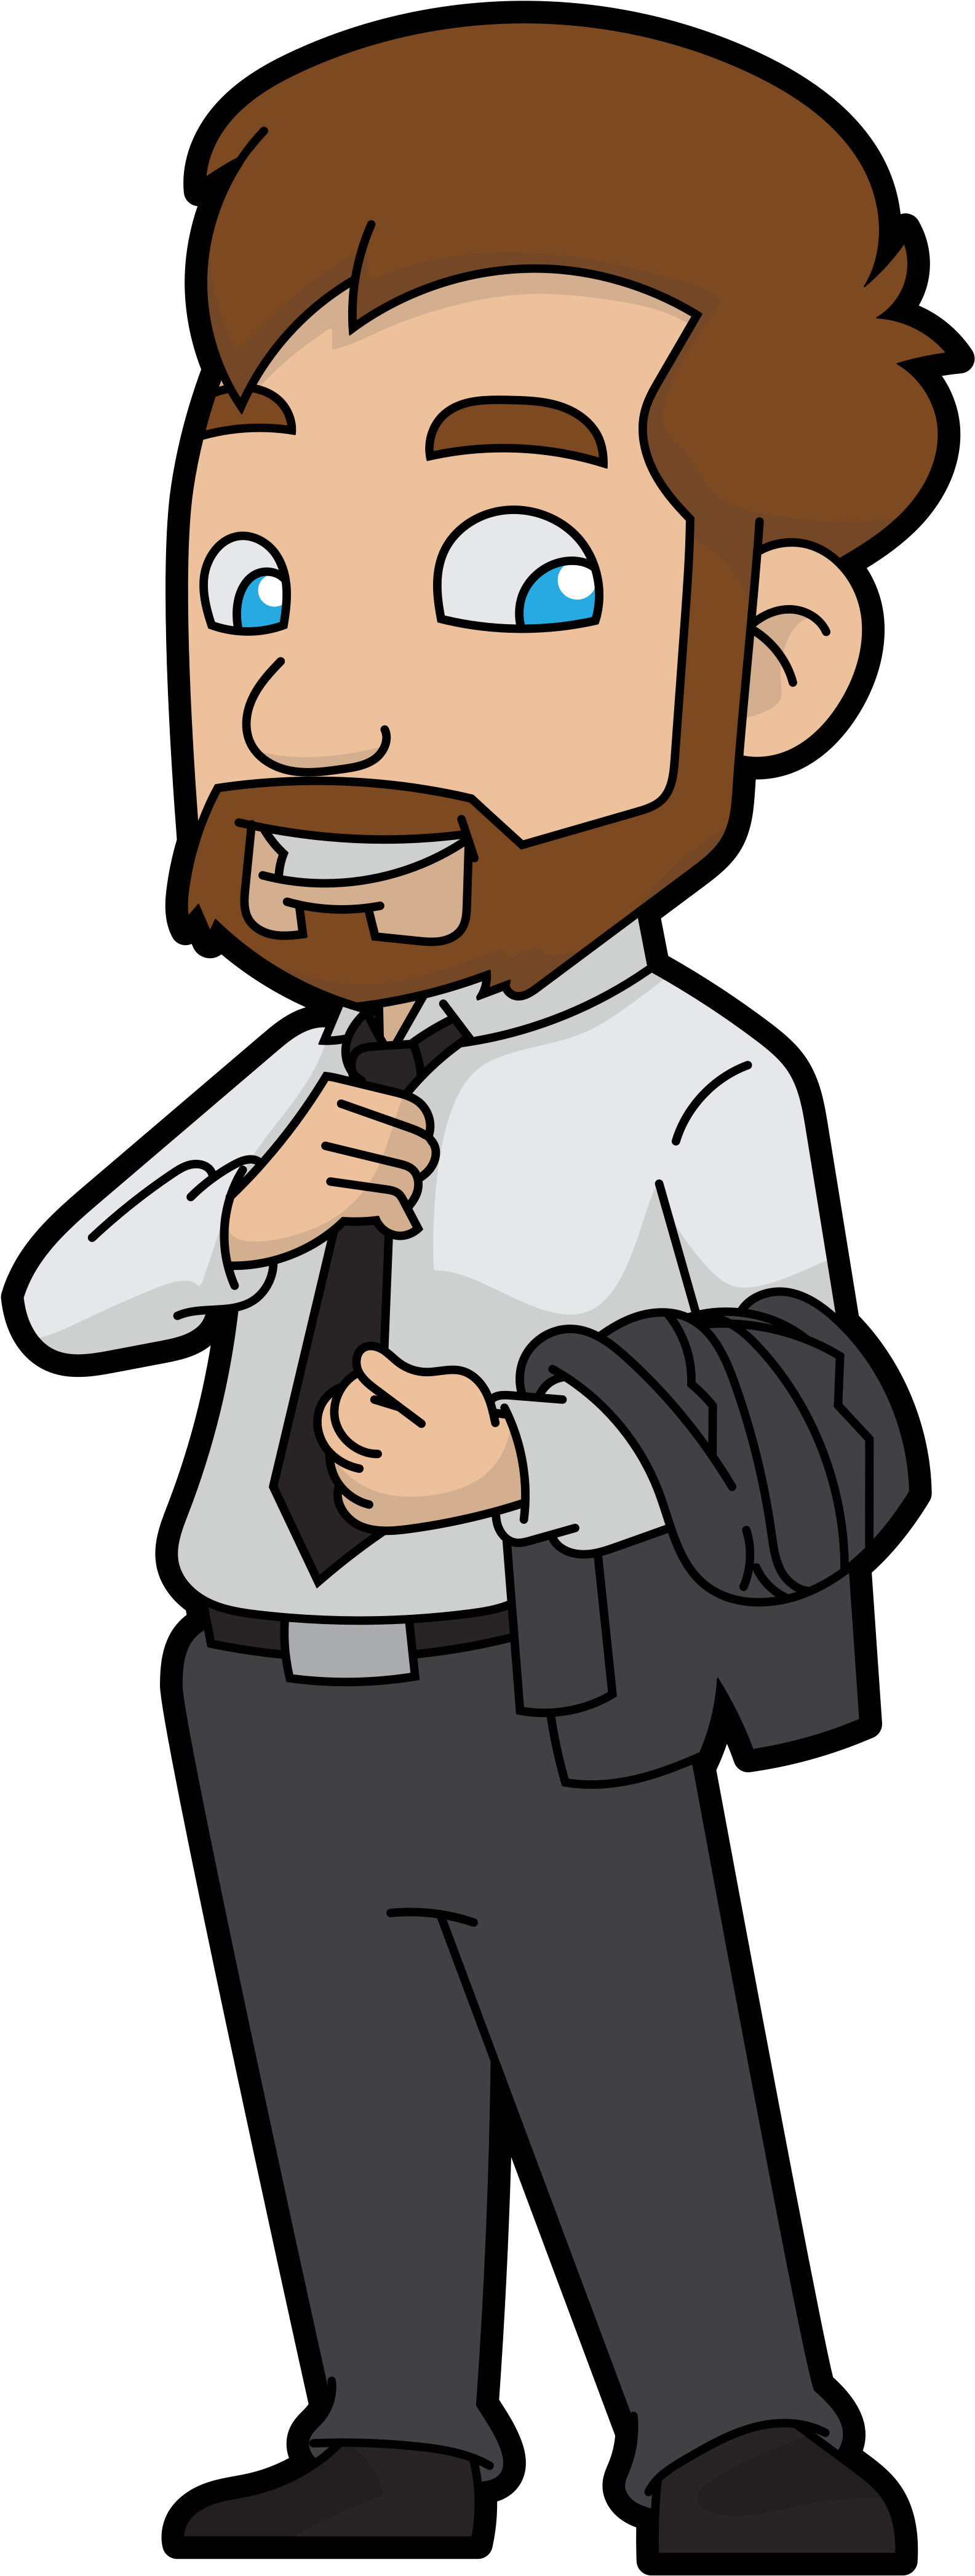 A Bearded Charming Cartoon Businessman - Wikimedia Commons (2000x4552)